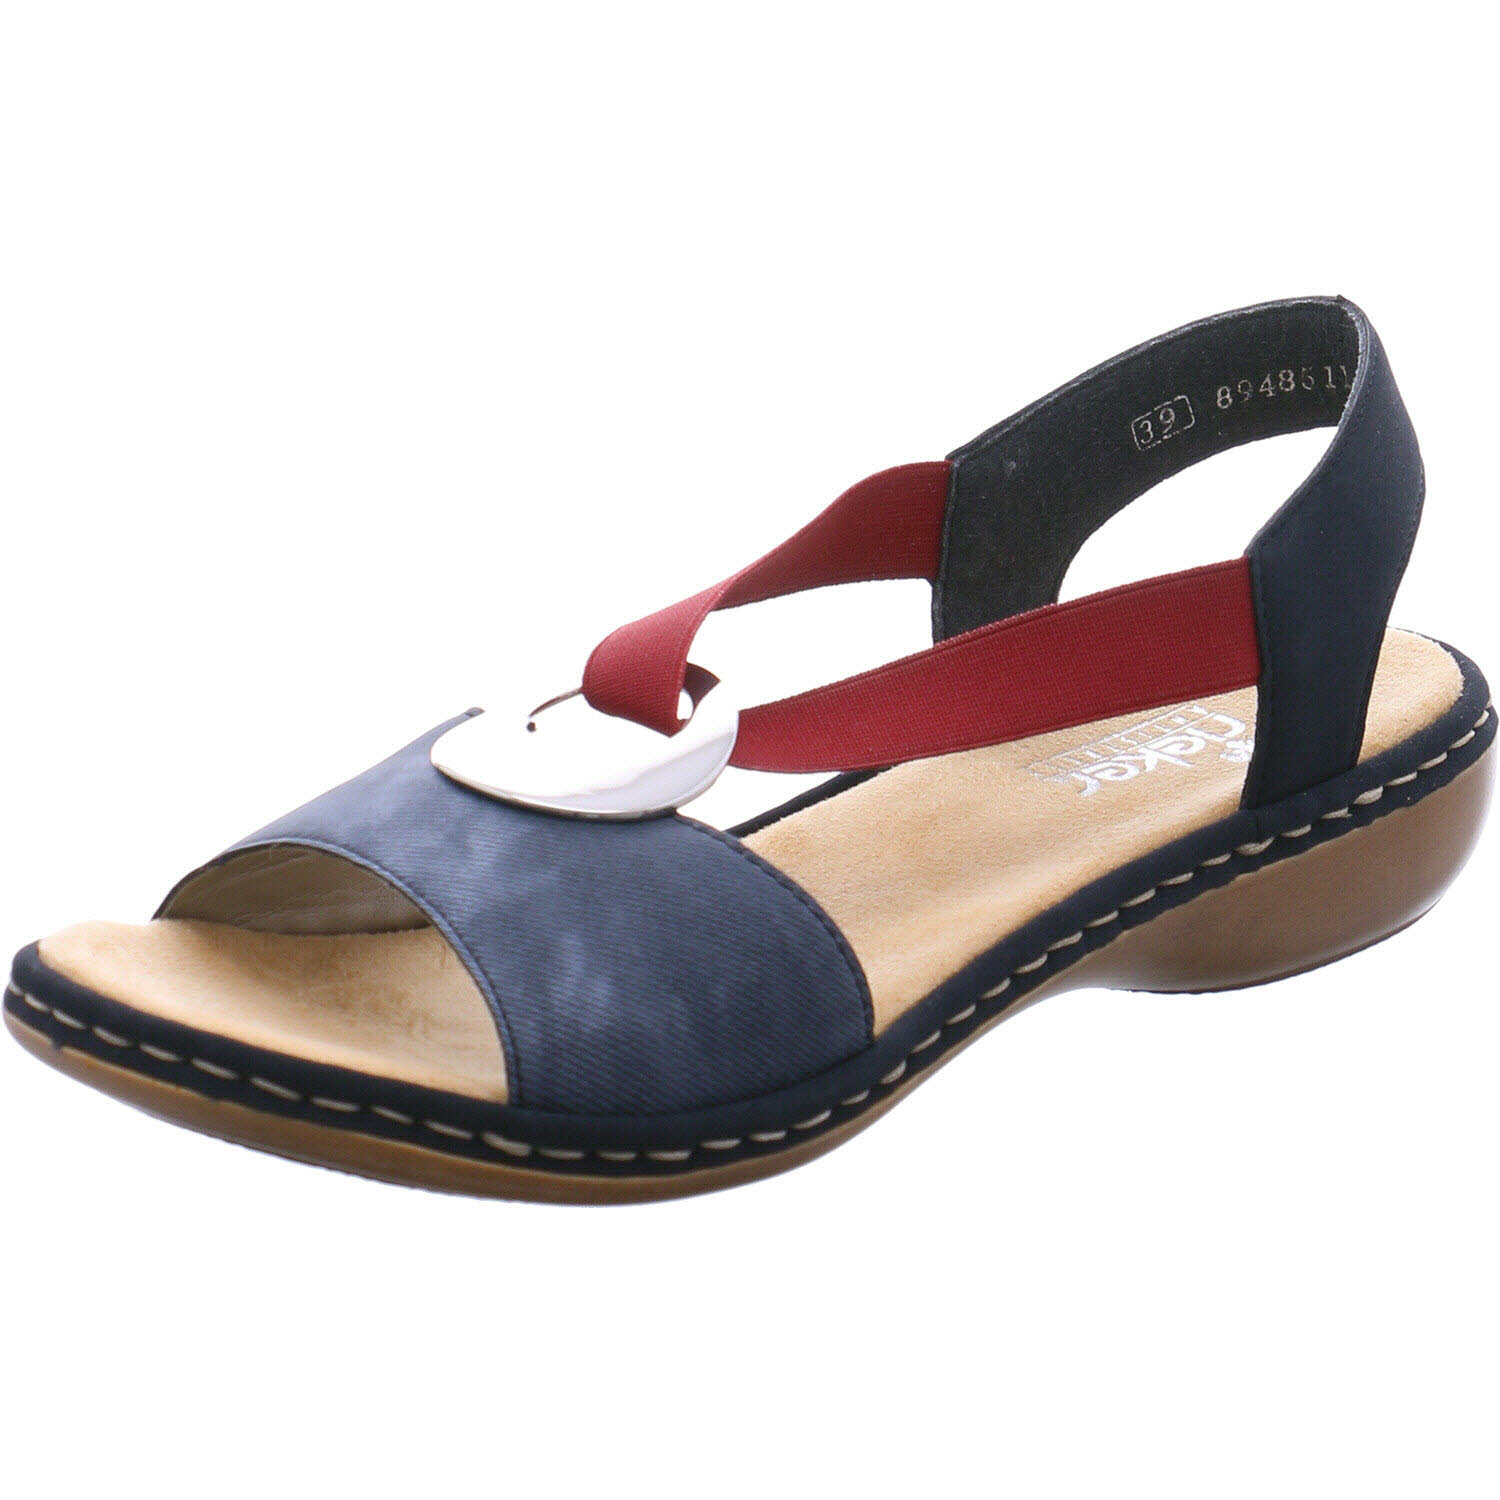 Rieker Sandale Blau/rot für Damen